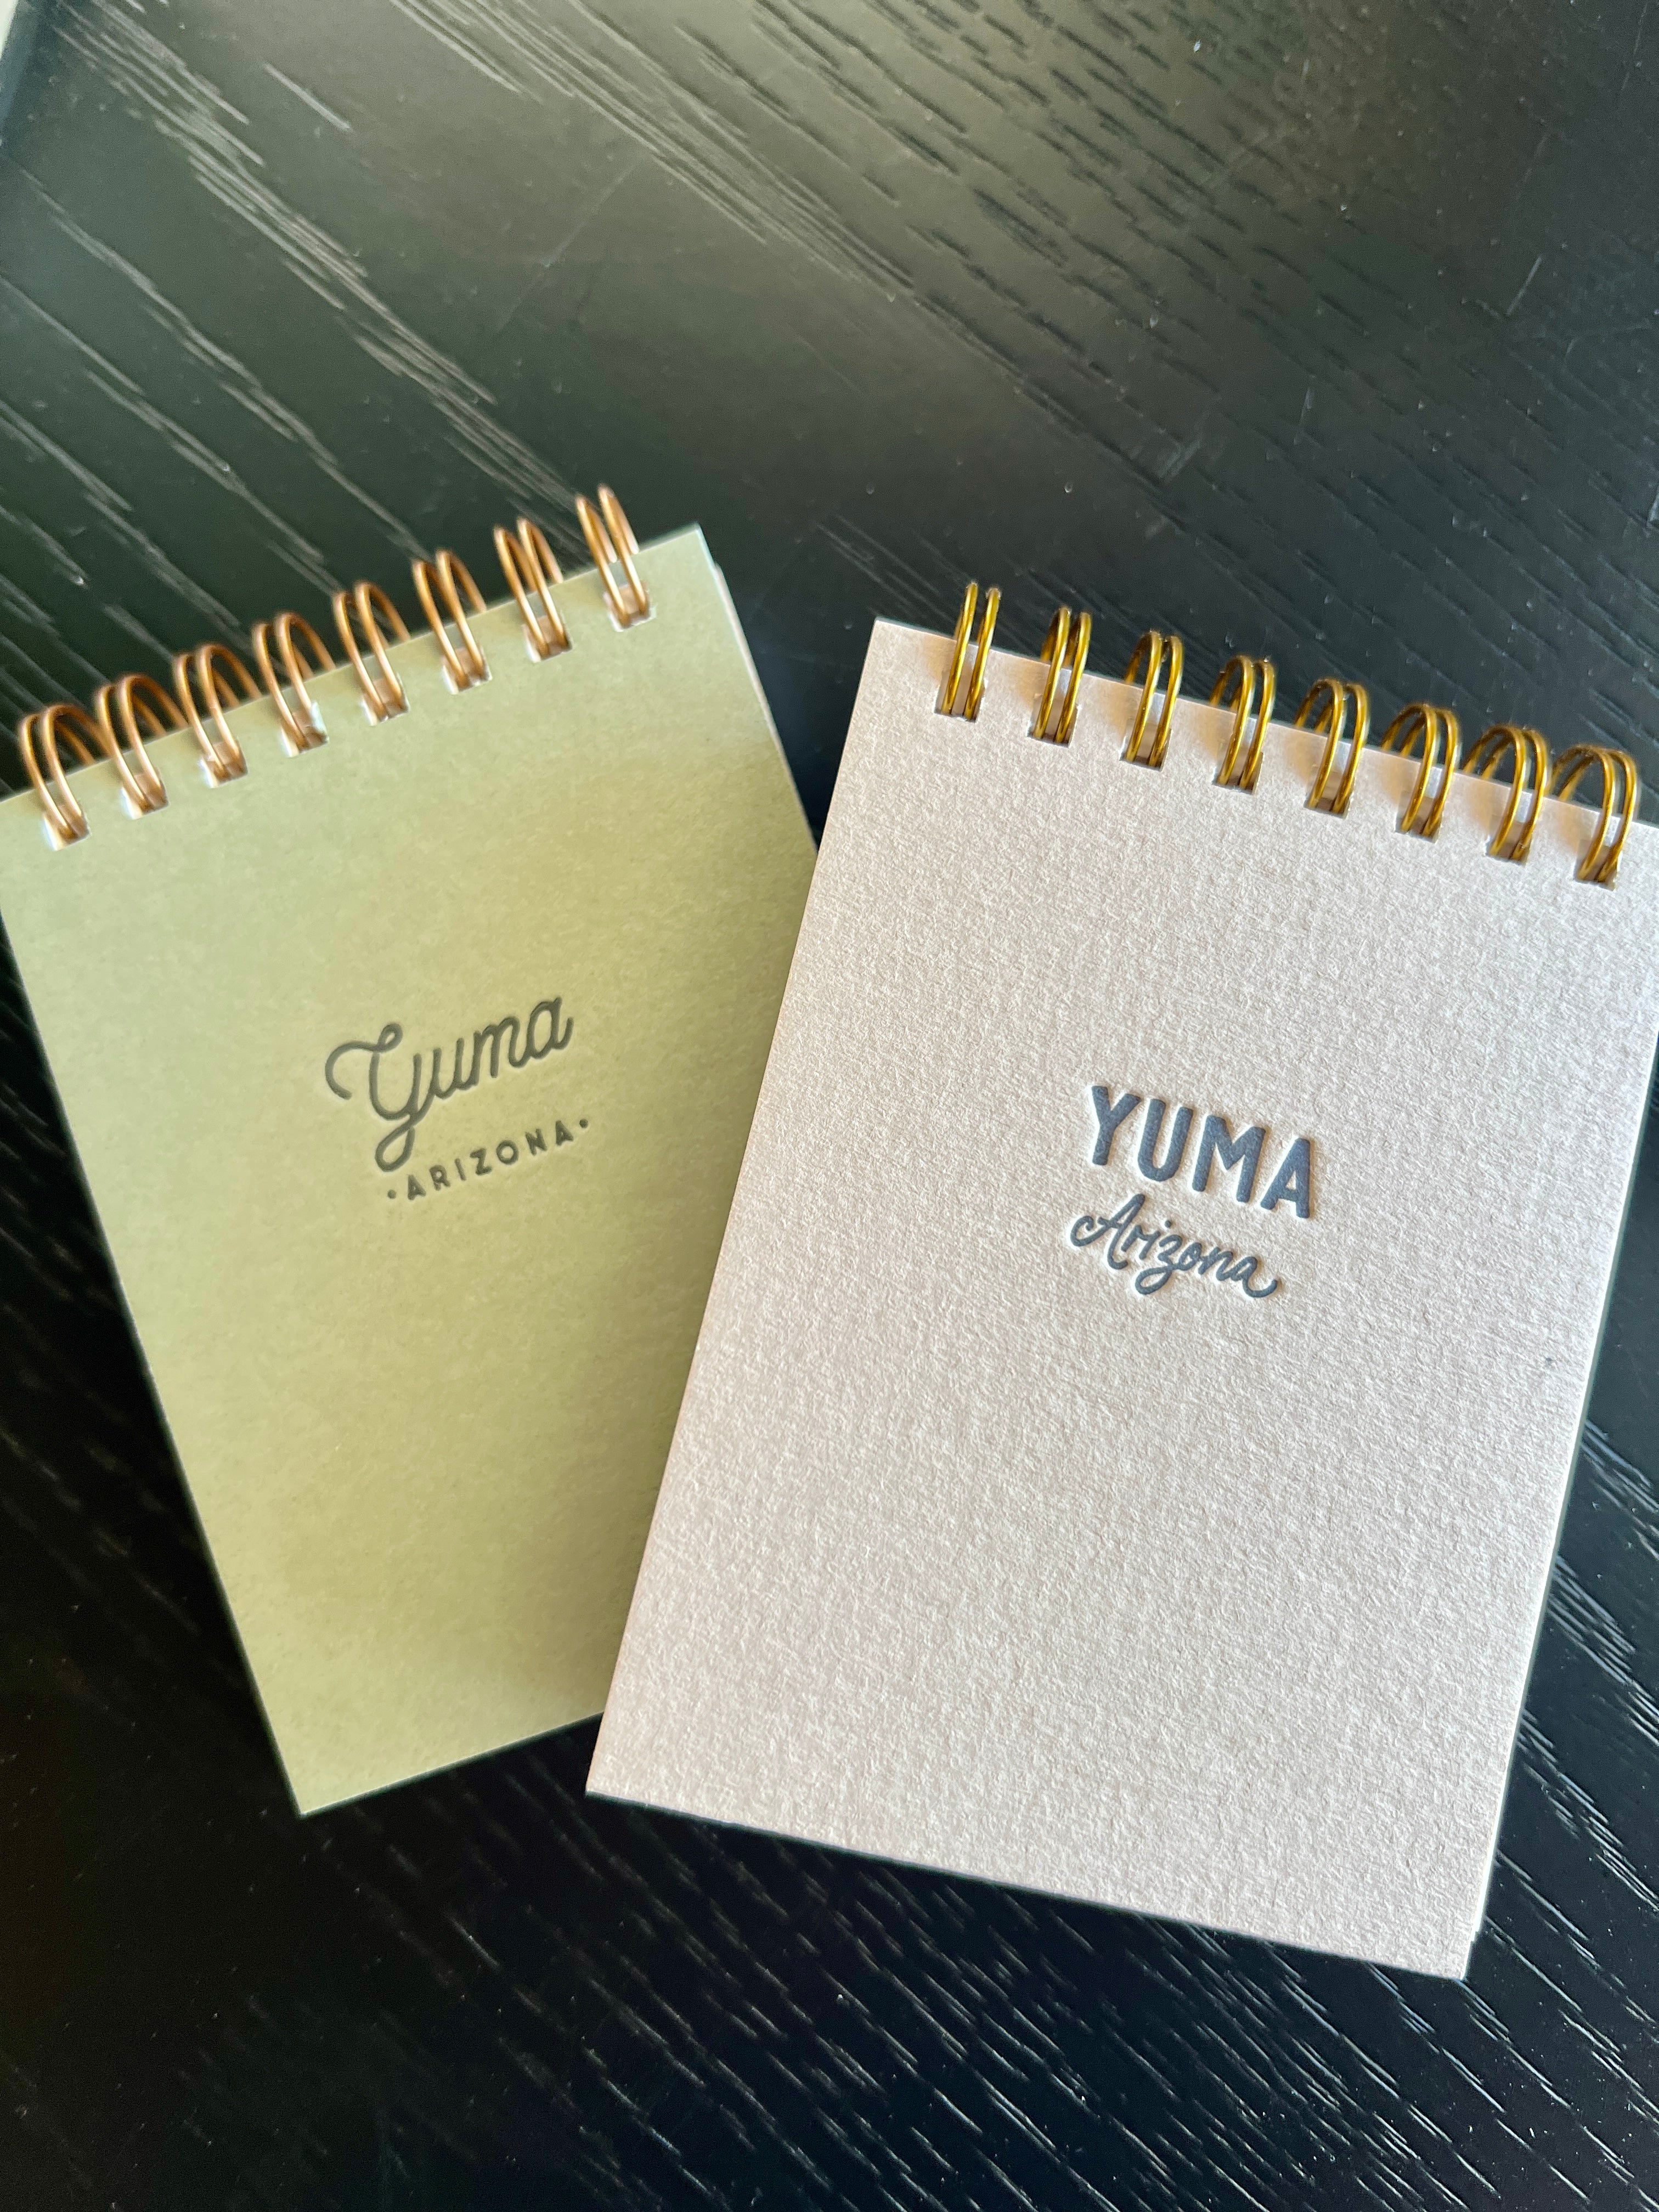 Yuma City Jotter Notebook